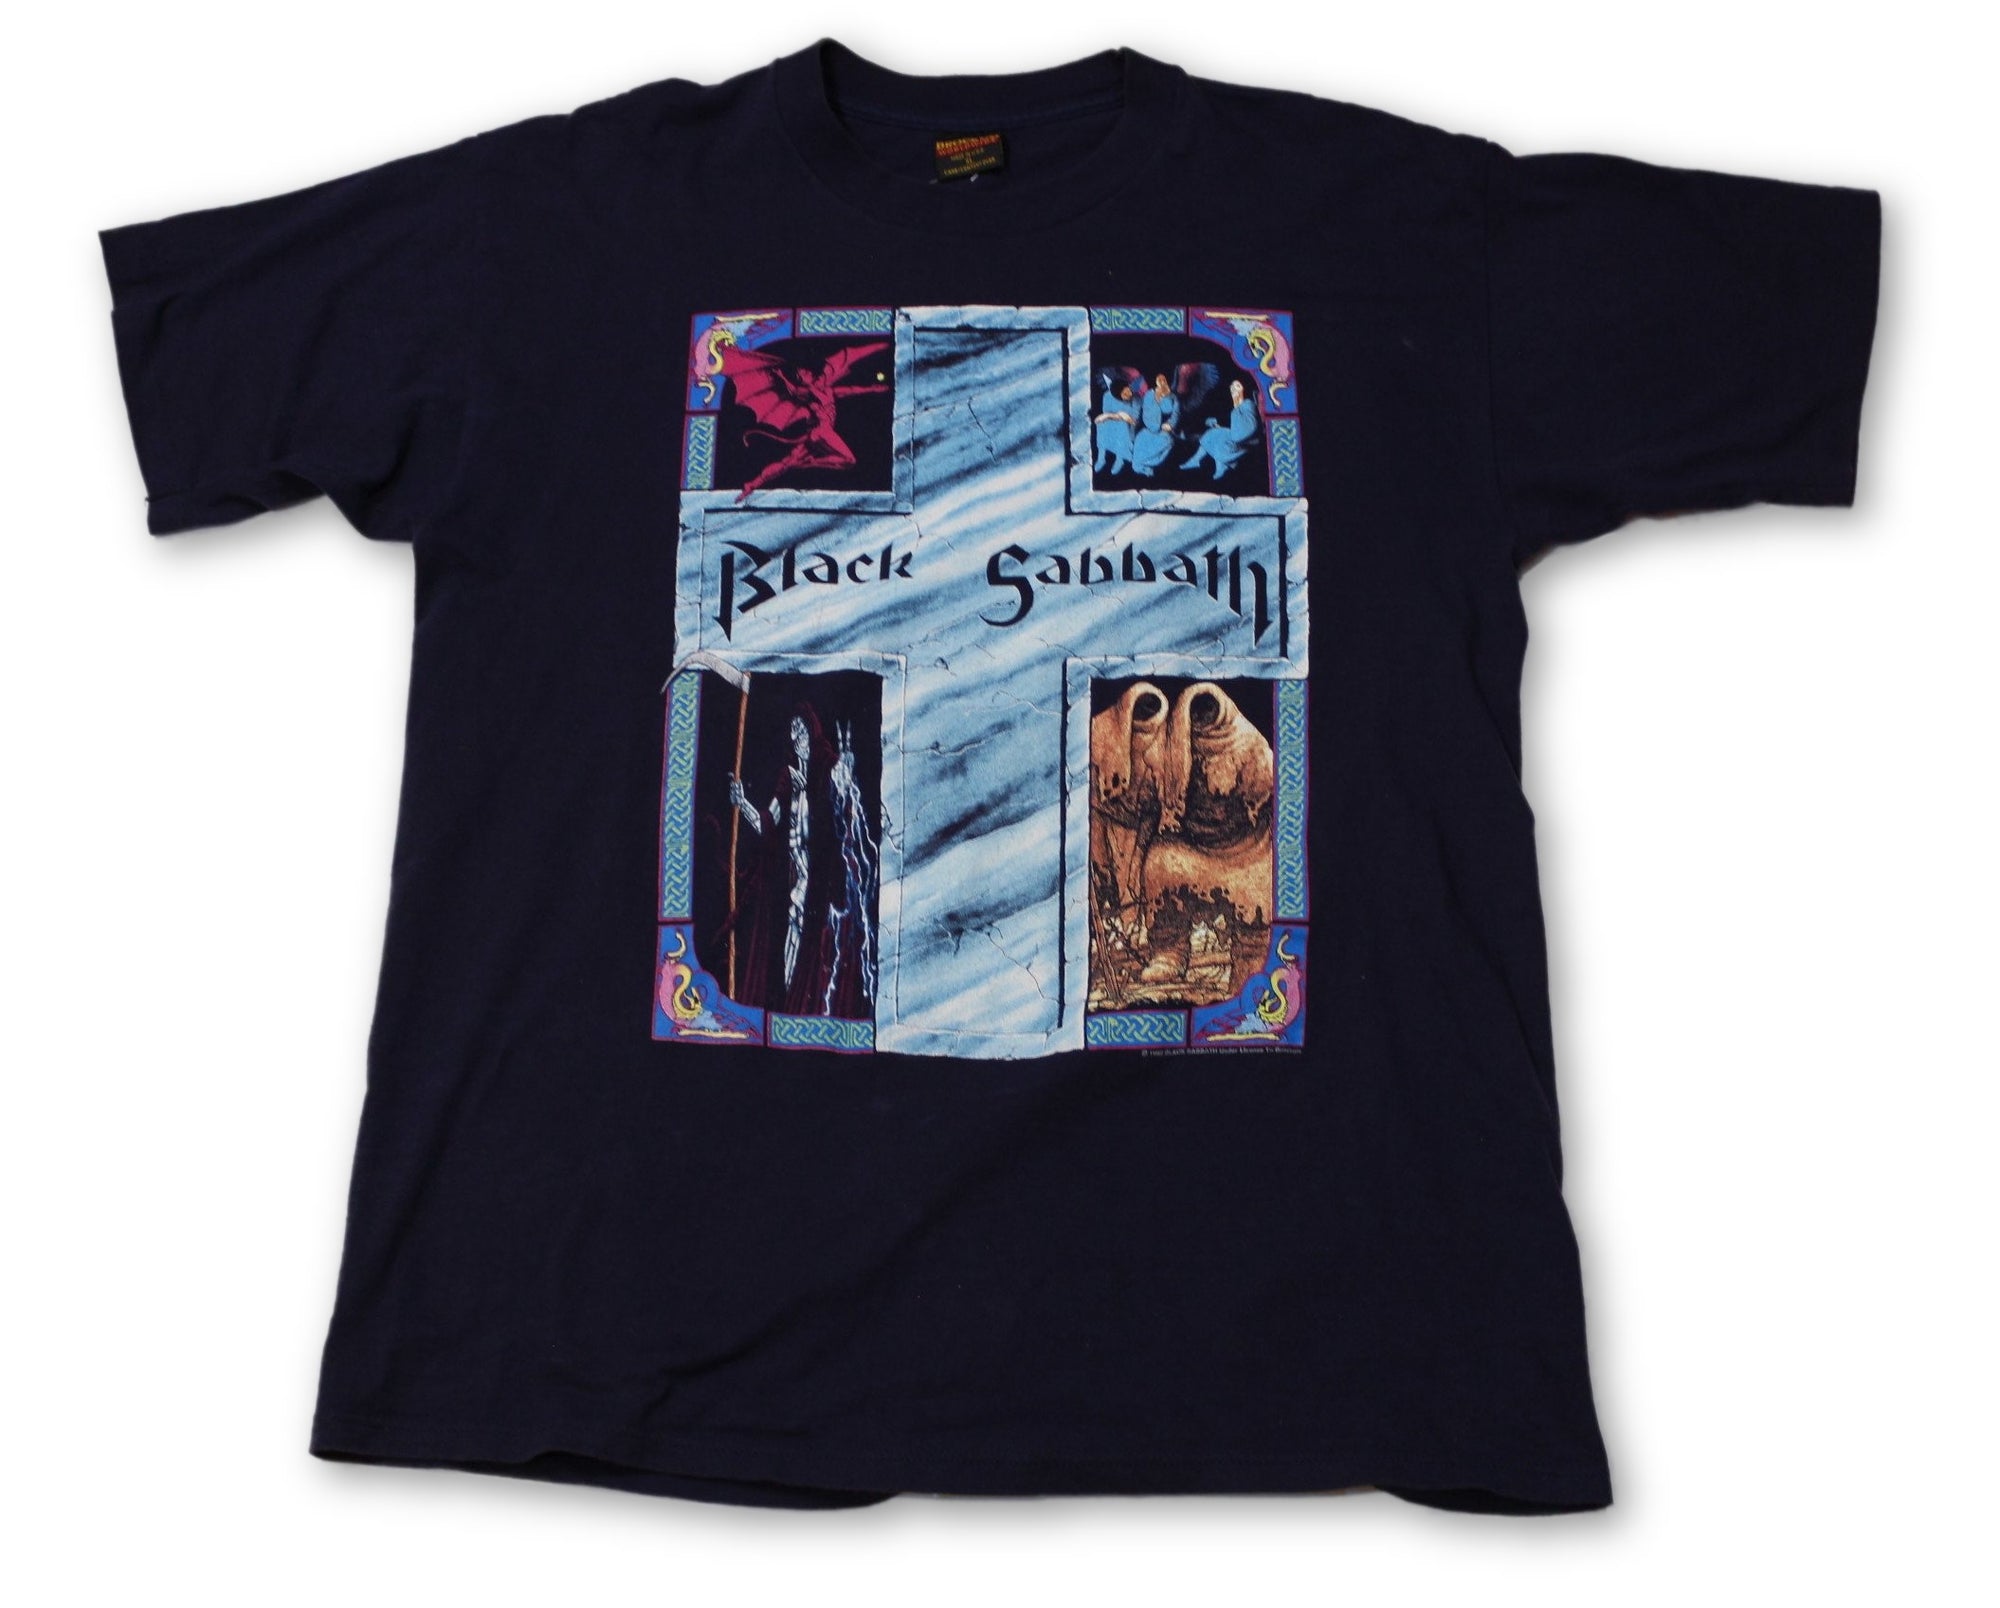 Vintage Black Sabbath "Dehumanizer" T-Shirt - jointcustodydc